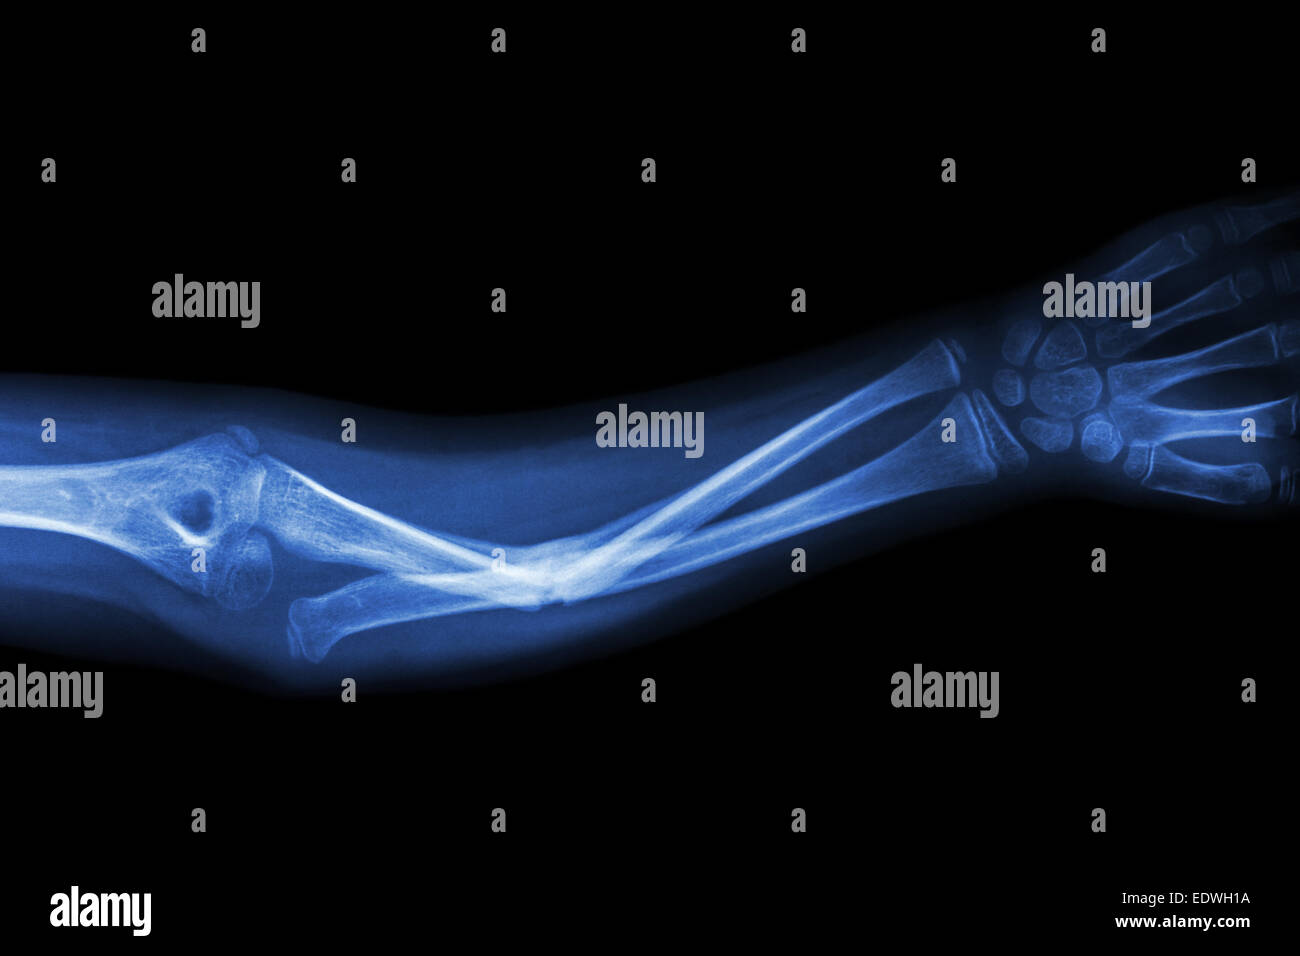 Fracture ulnar bone (forearm bone) Stock Photo